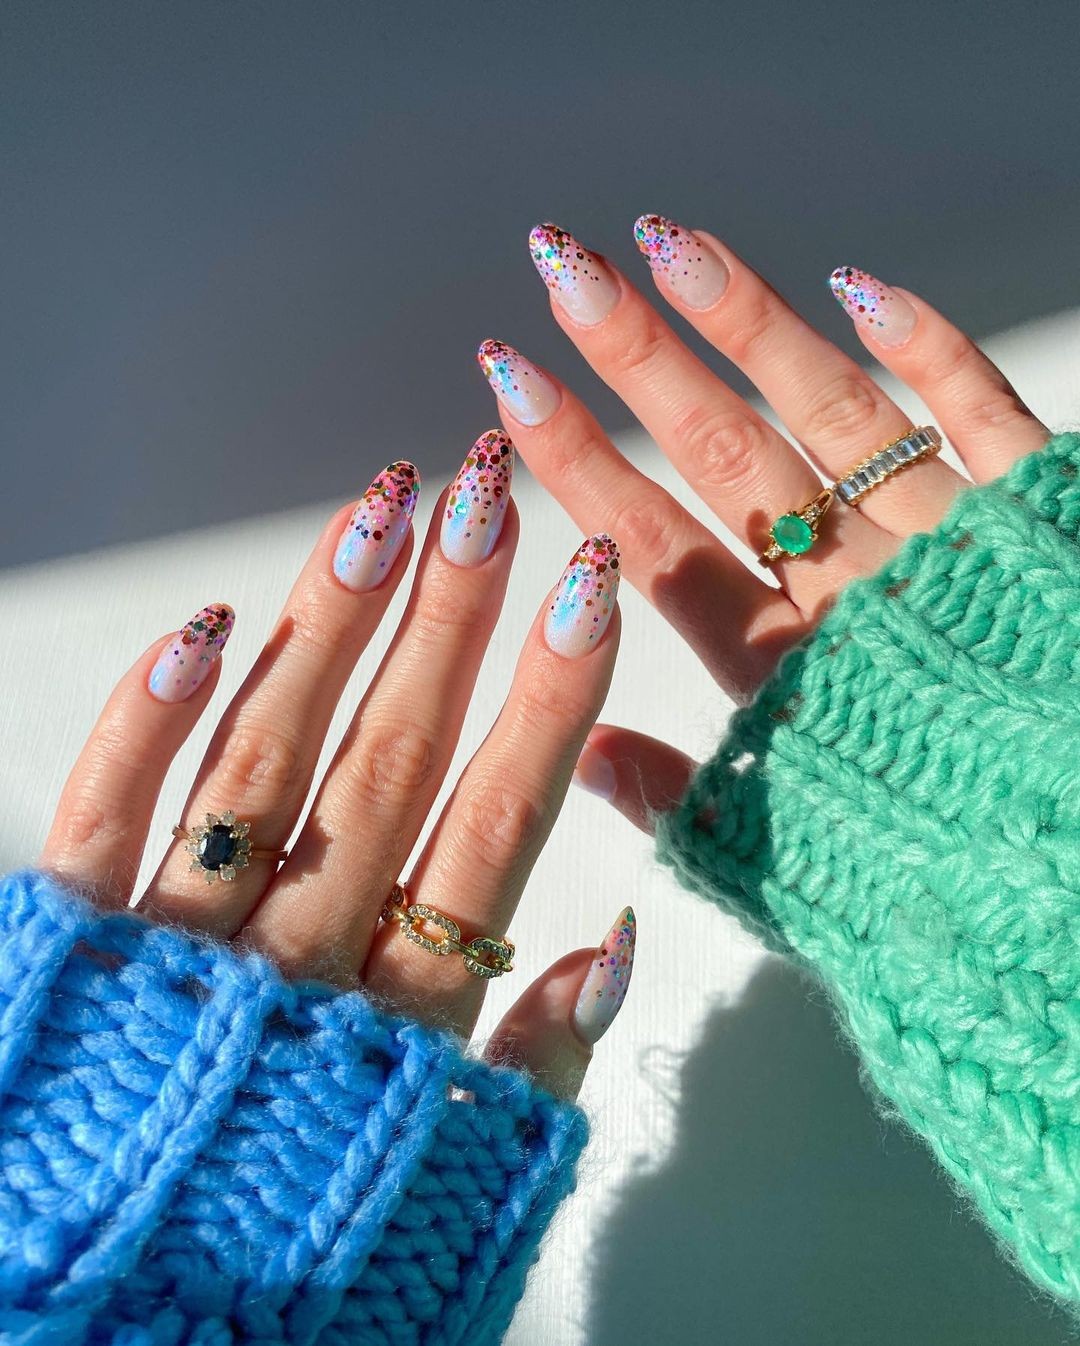 Nail art com glitter — Foto: Instagram